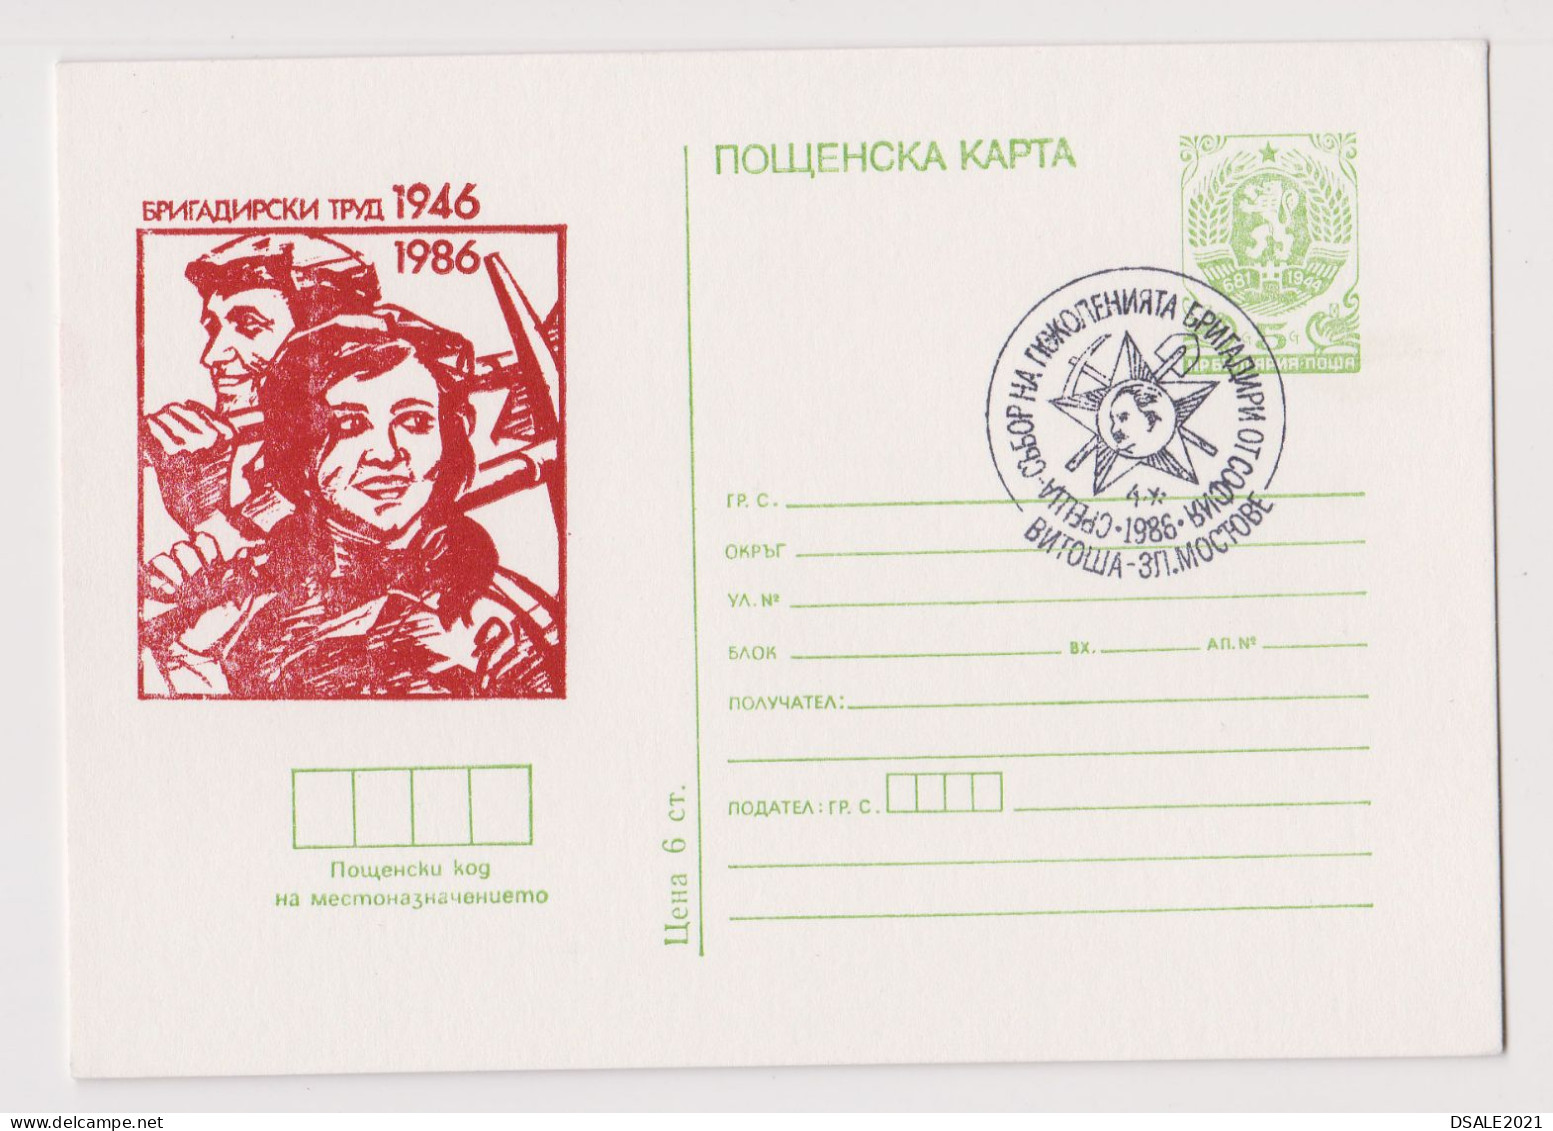 Bulgaria Bulgarie Bulgarien 1986 Postal Stationery Card, Ganzsachen, Entier, 1946 Bulgarian Youth Brigade Movement 67498 - Postcards